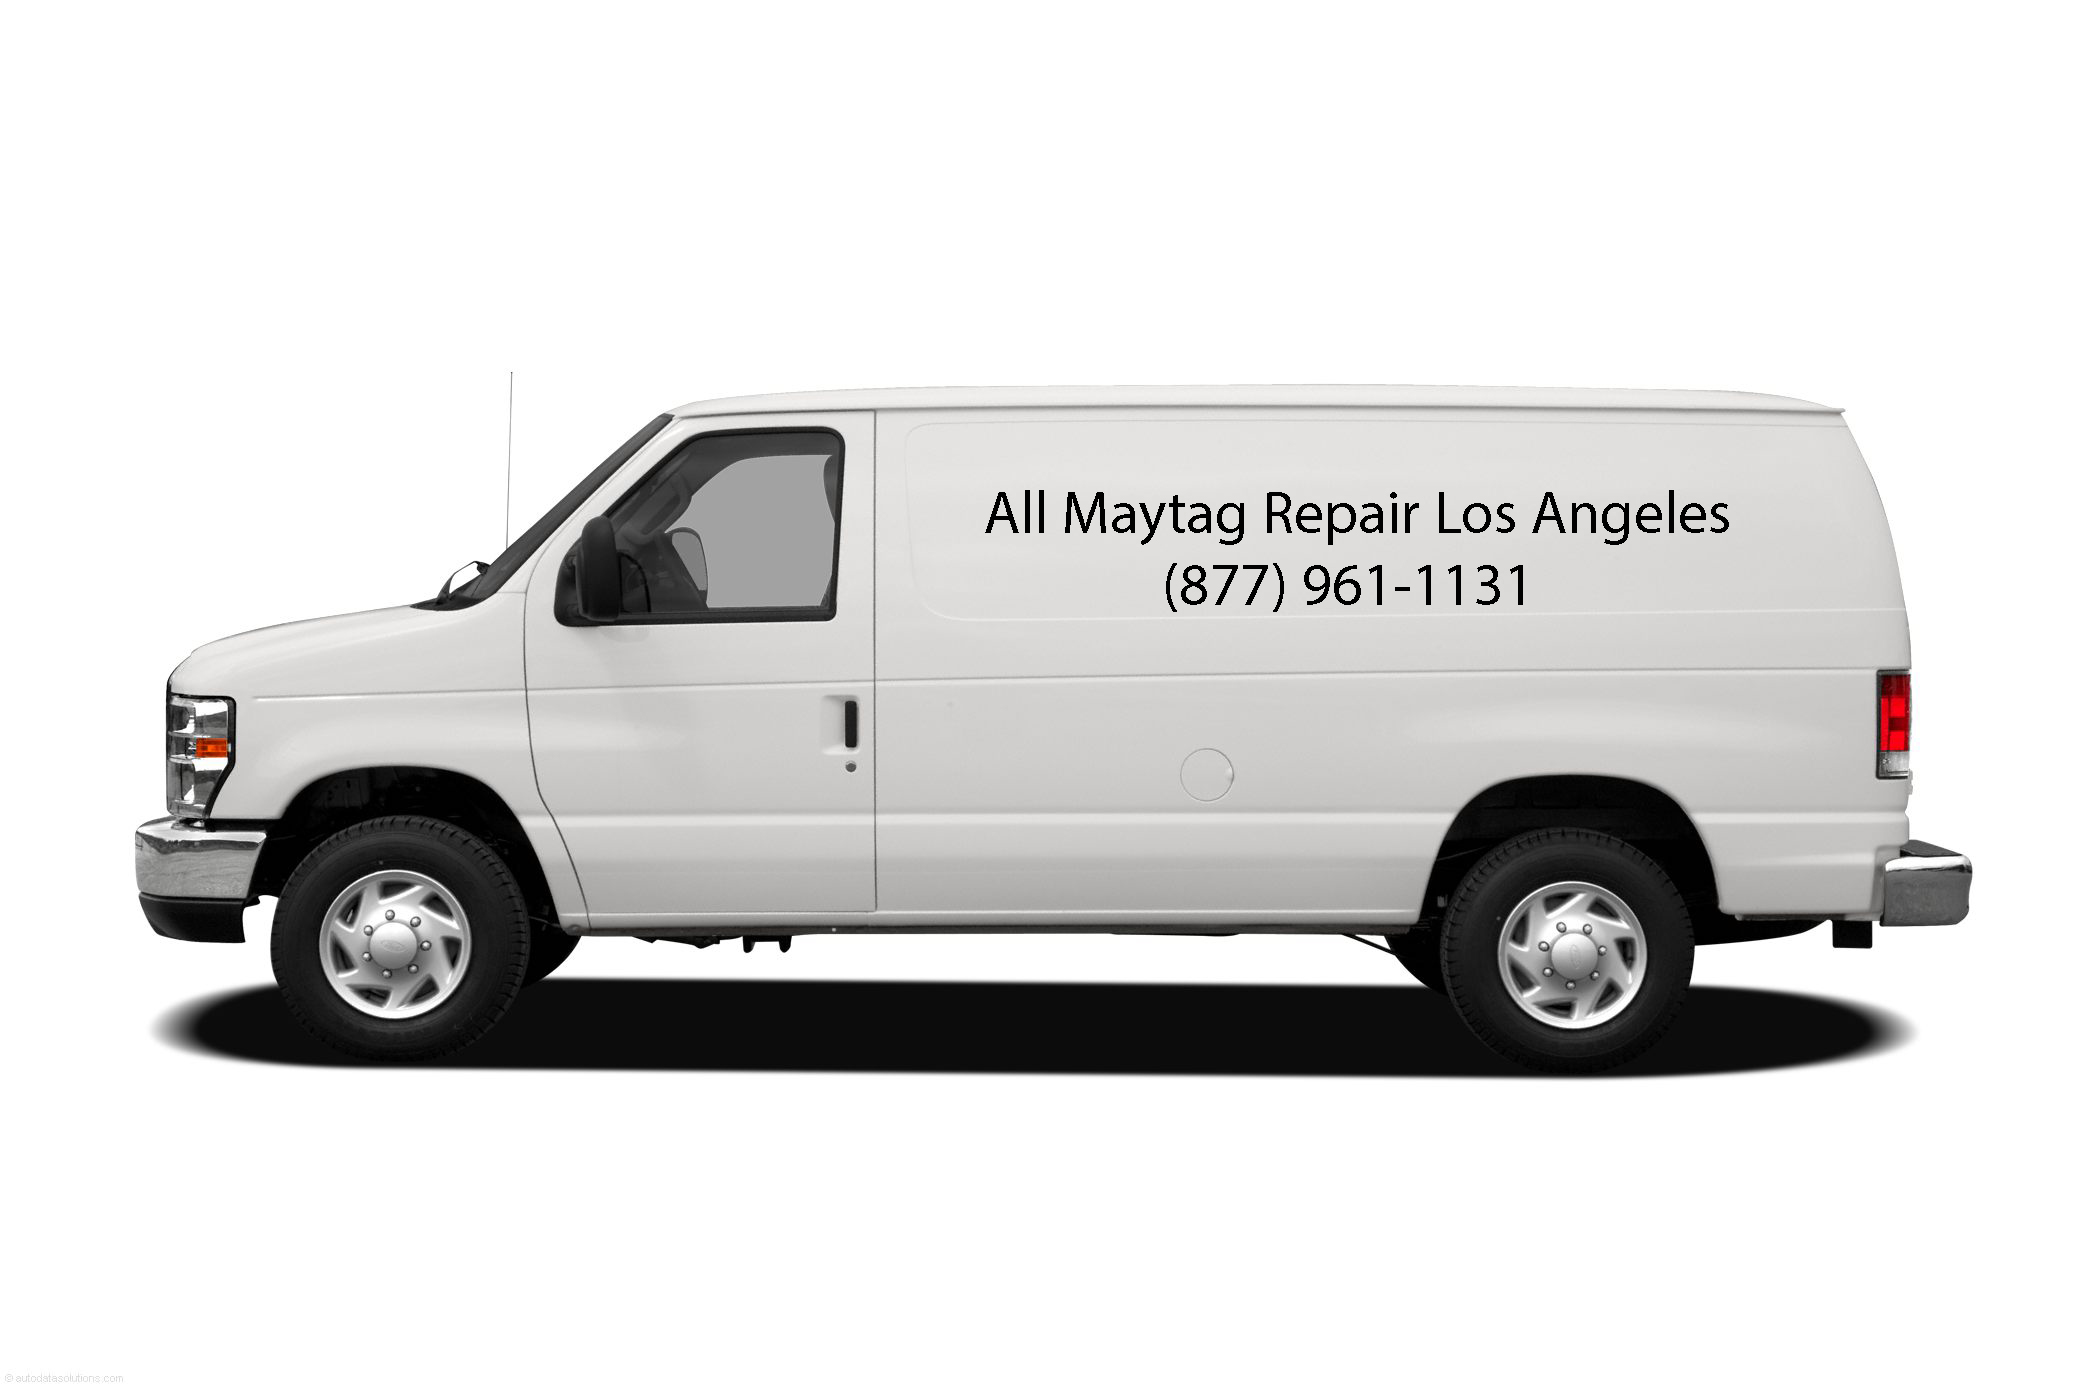 All Maytag Repair Los Angeles's Logo